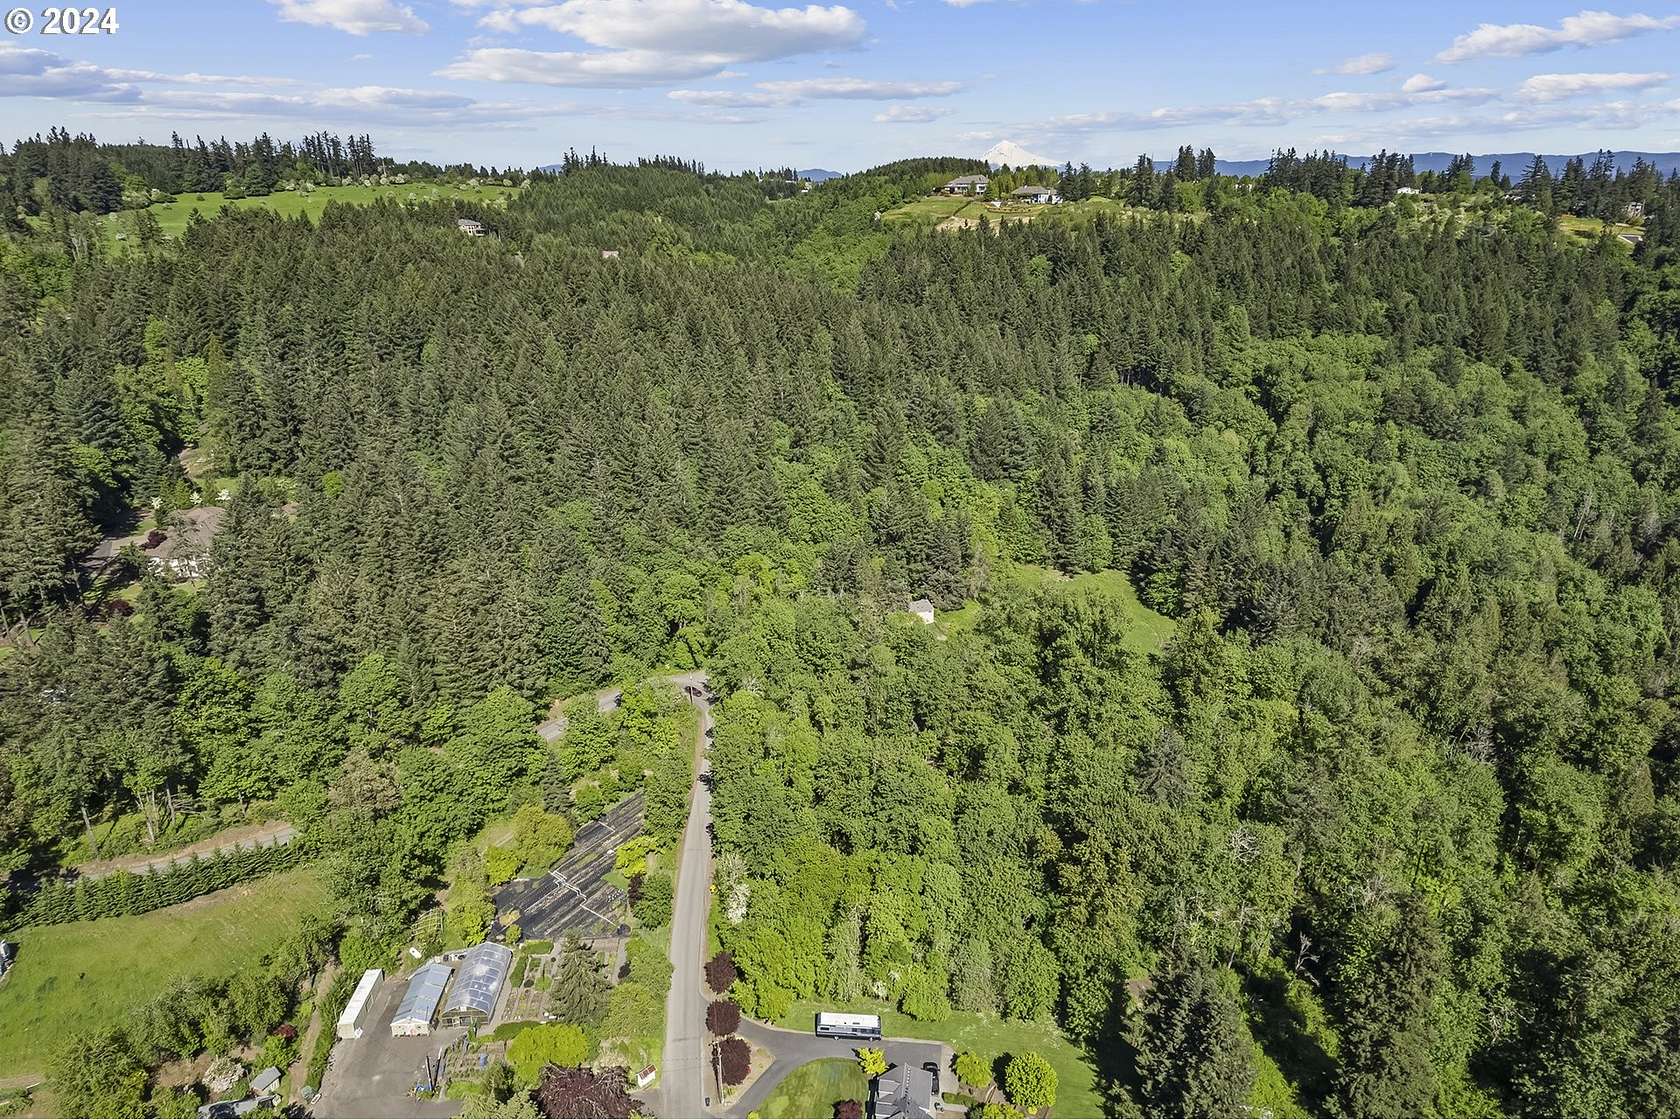 7.6 Acres of Land for Sale in West Linn, Oregon